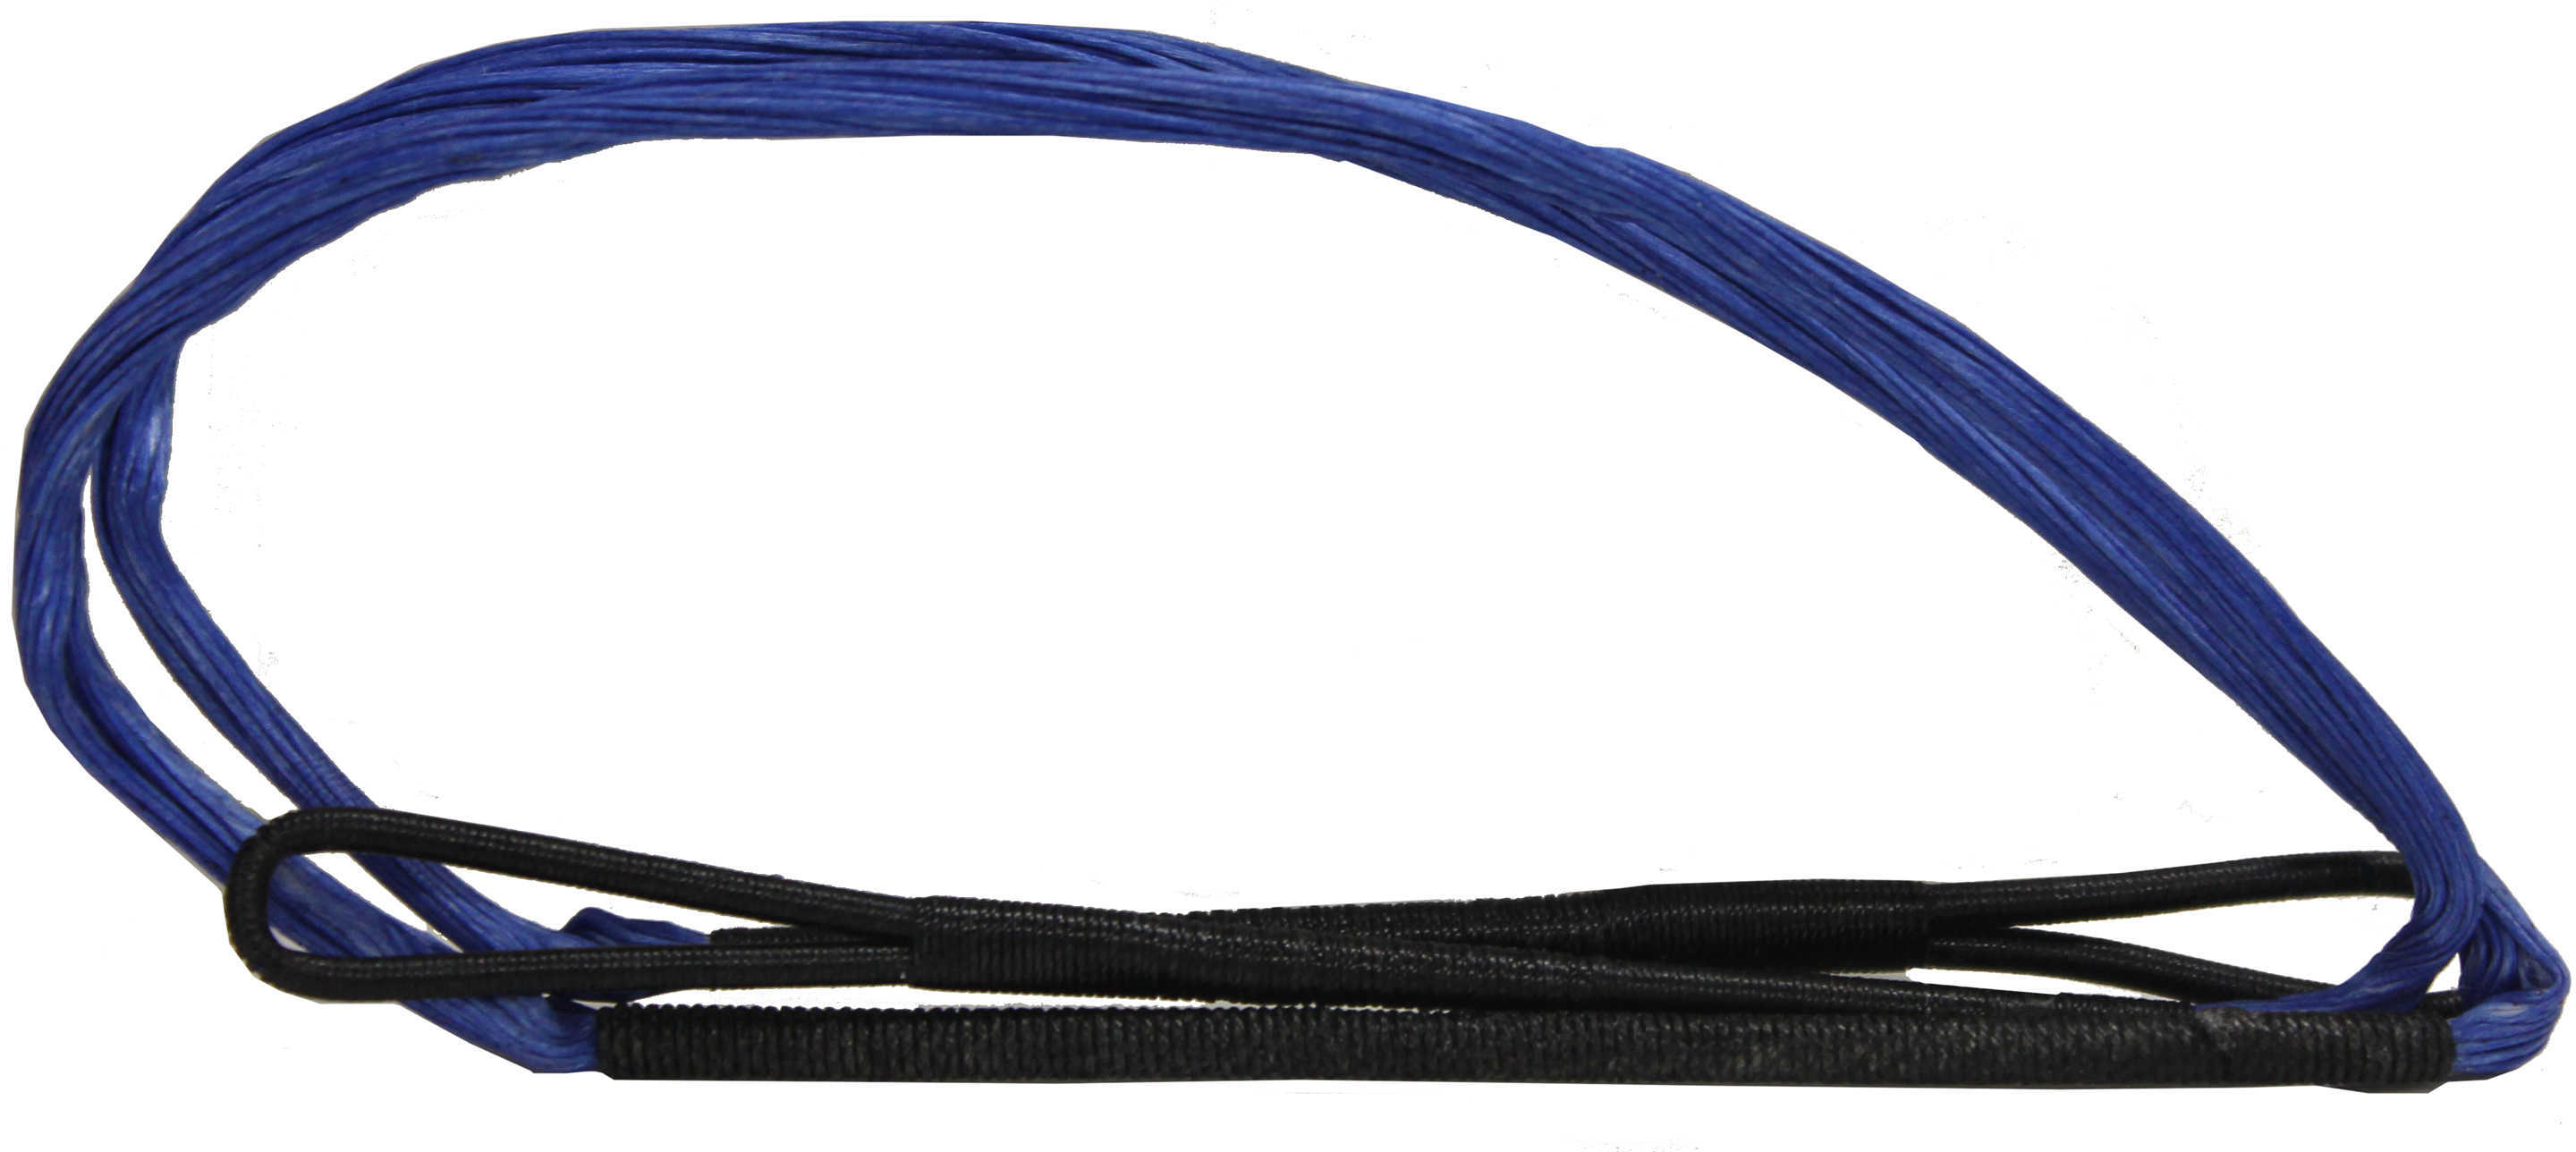 Excalibur Matrix String Blue Model: 1992SB